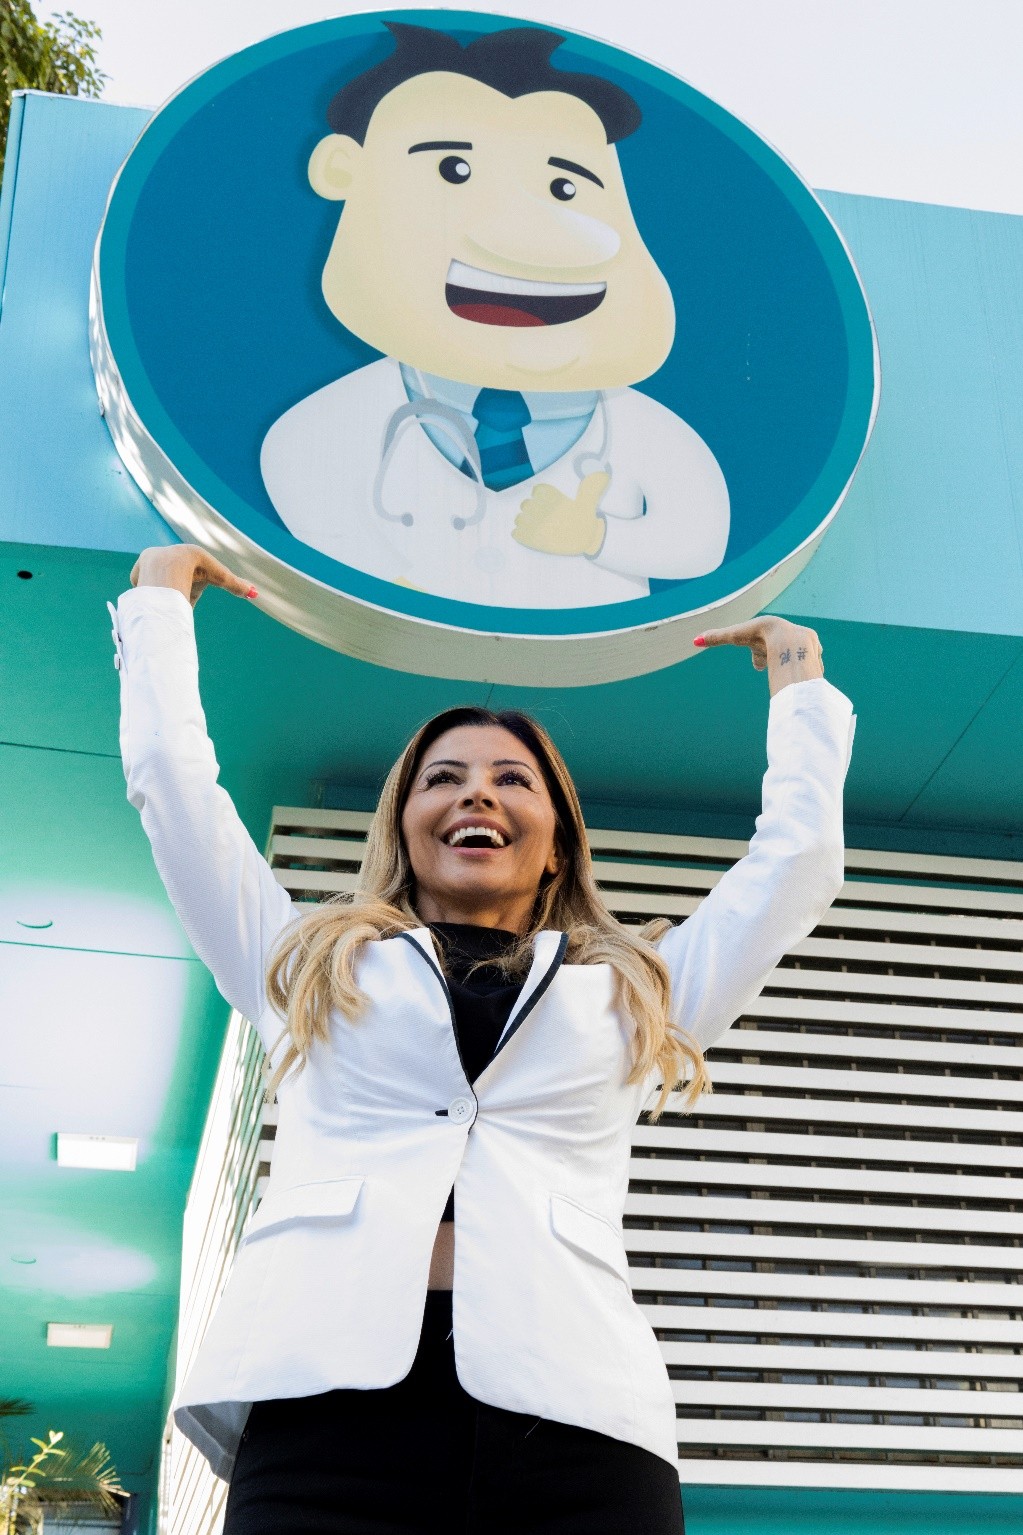 Lúcia Feitoza, CEO da Rede de Clínicas Dr. Saúde, comemora resultados